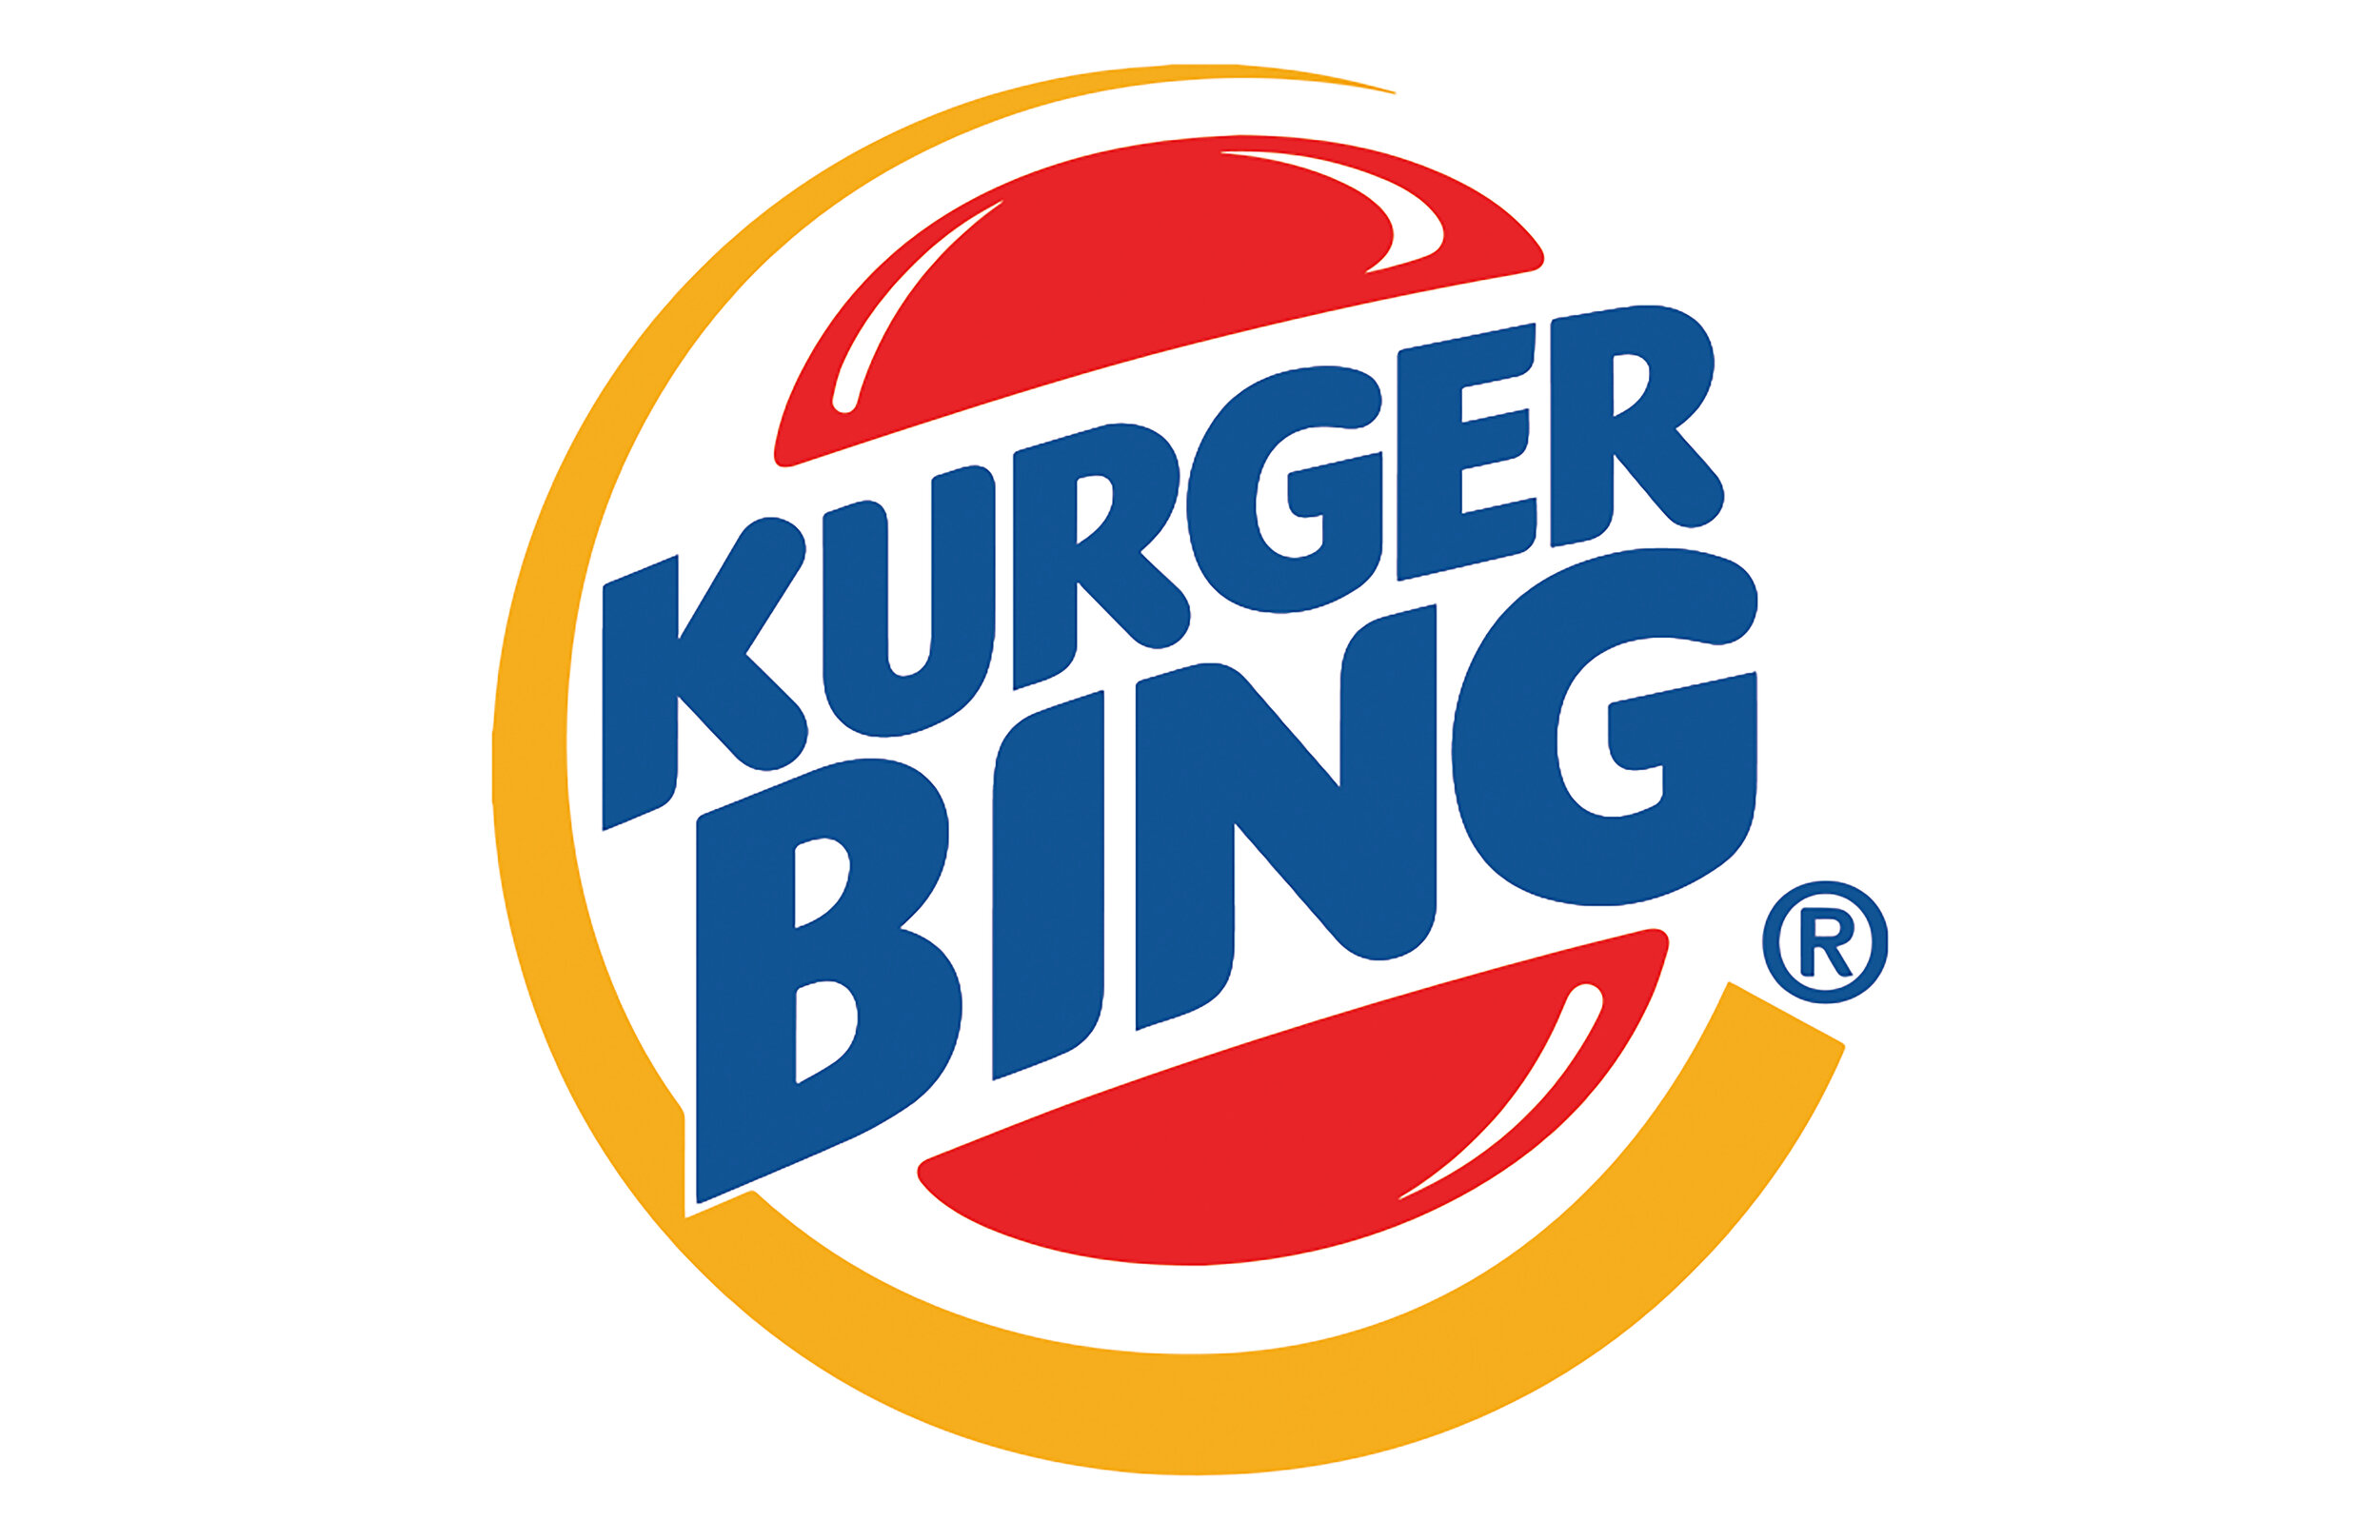 KURGER BING Logo.jpg